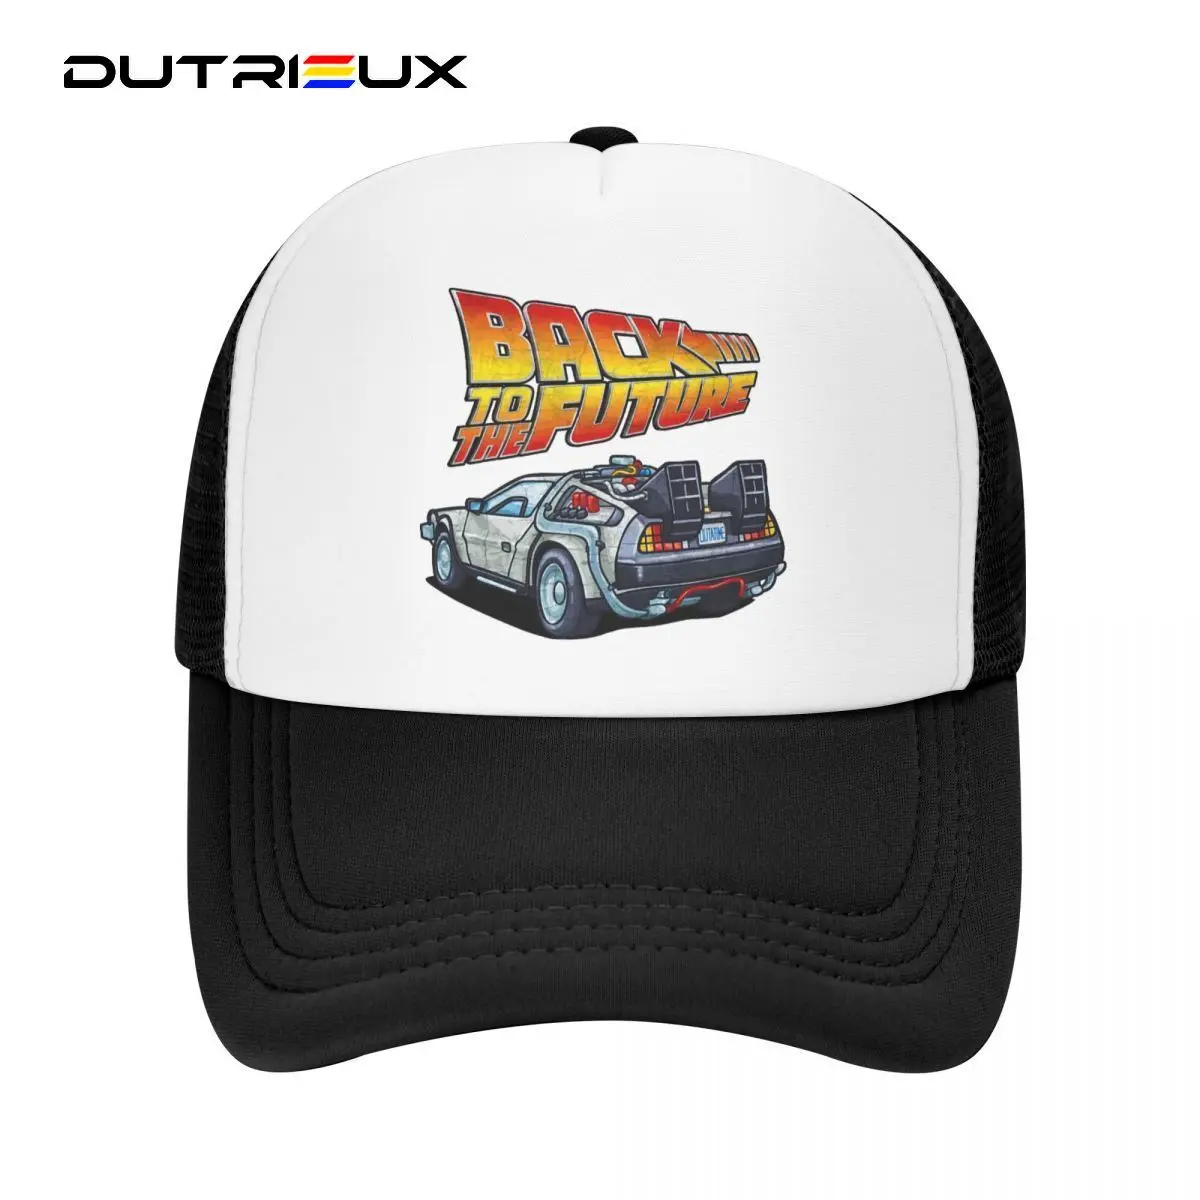 

DUTRIEUX Cool Back To The Future Trucker Hat Women Men Personalized Adjustable Unisex Baseball Cap Outdoor Snapback Caps